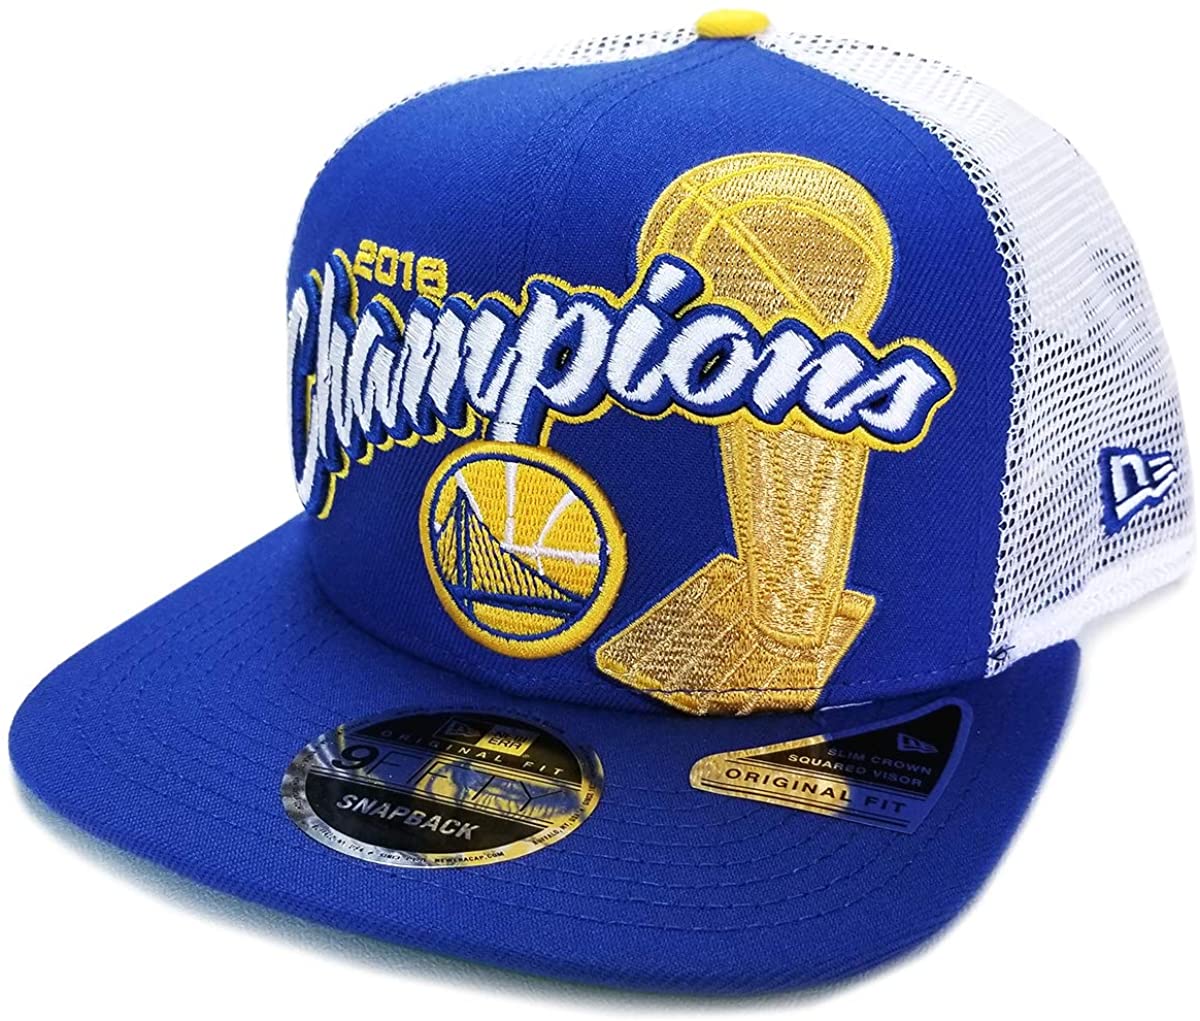 Top 5 NBA Champion Hats (Best Hats in 2021)